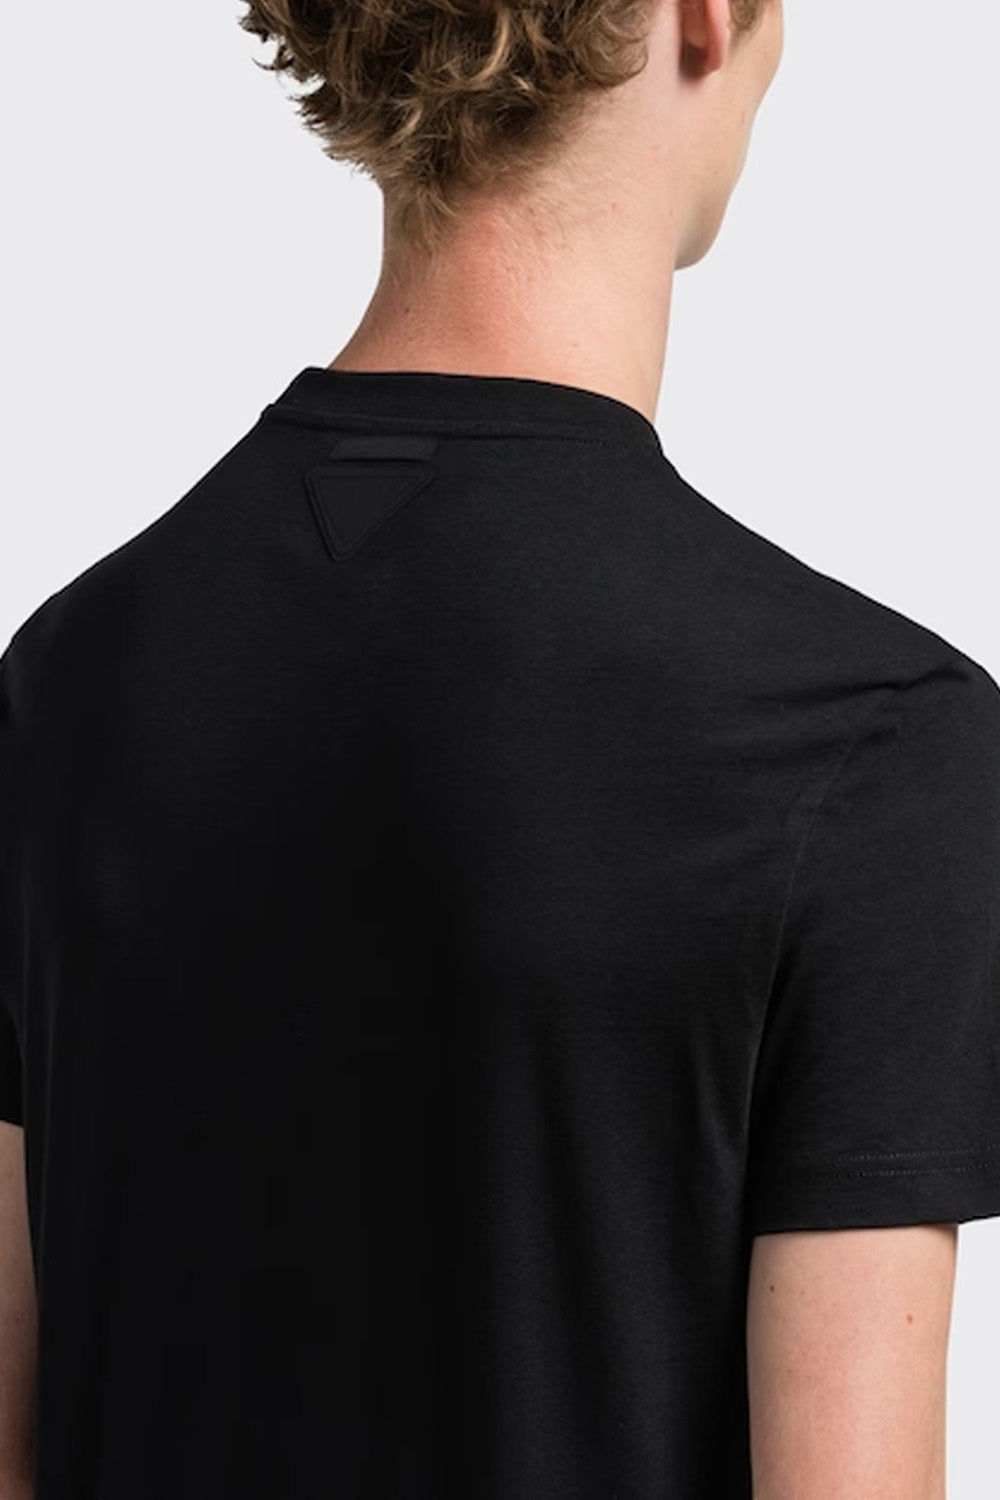 Prada cotton t-shirt black